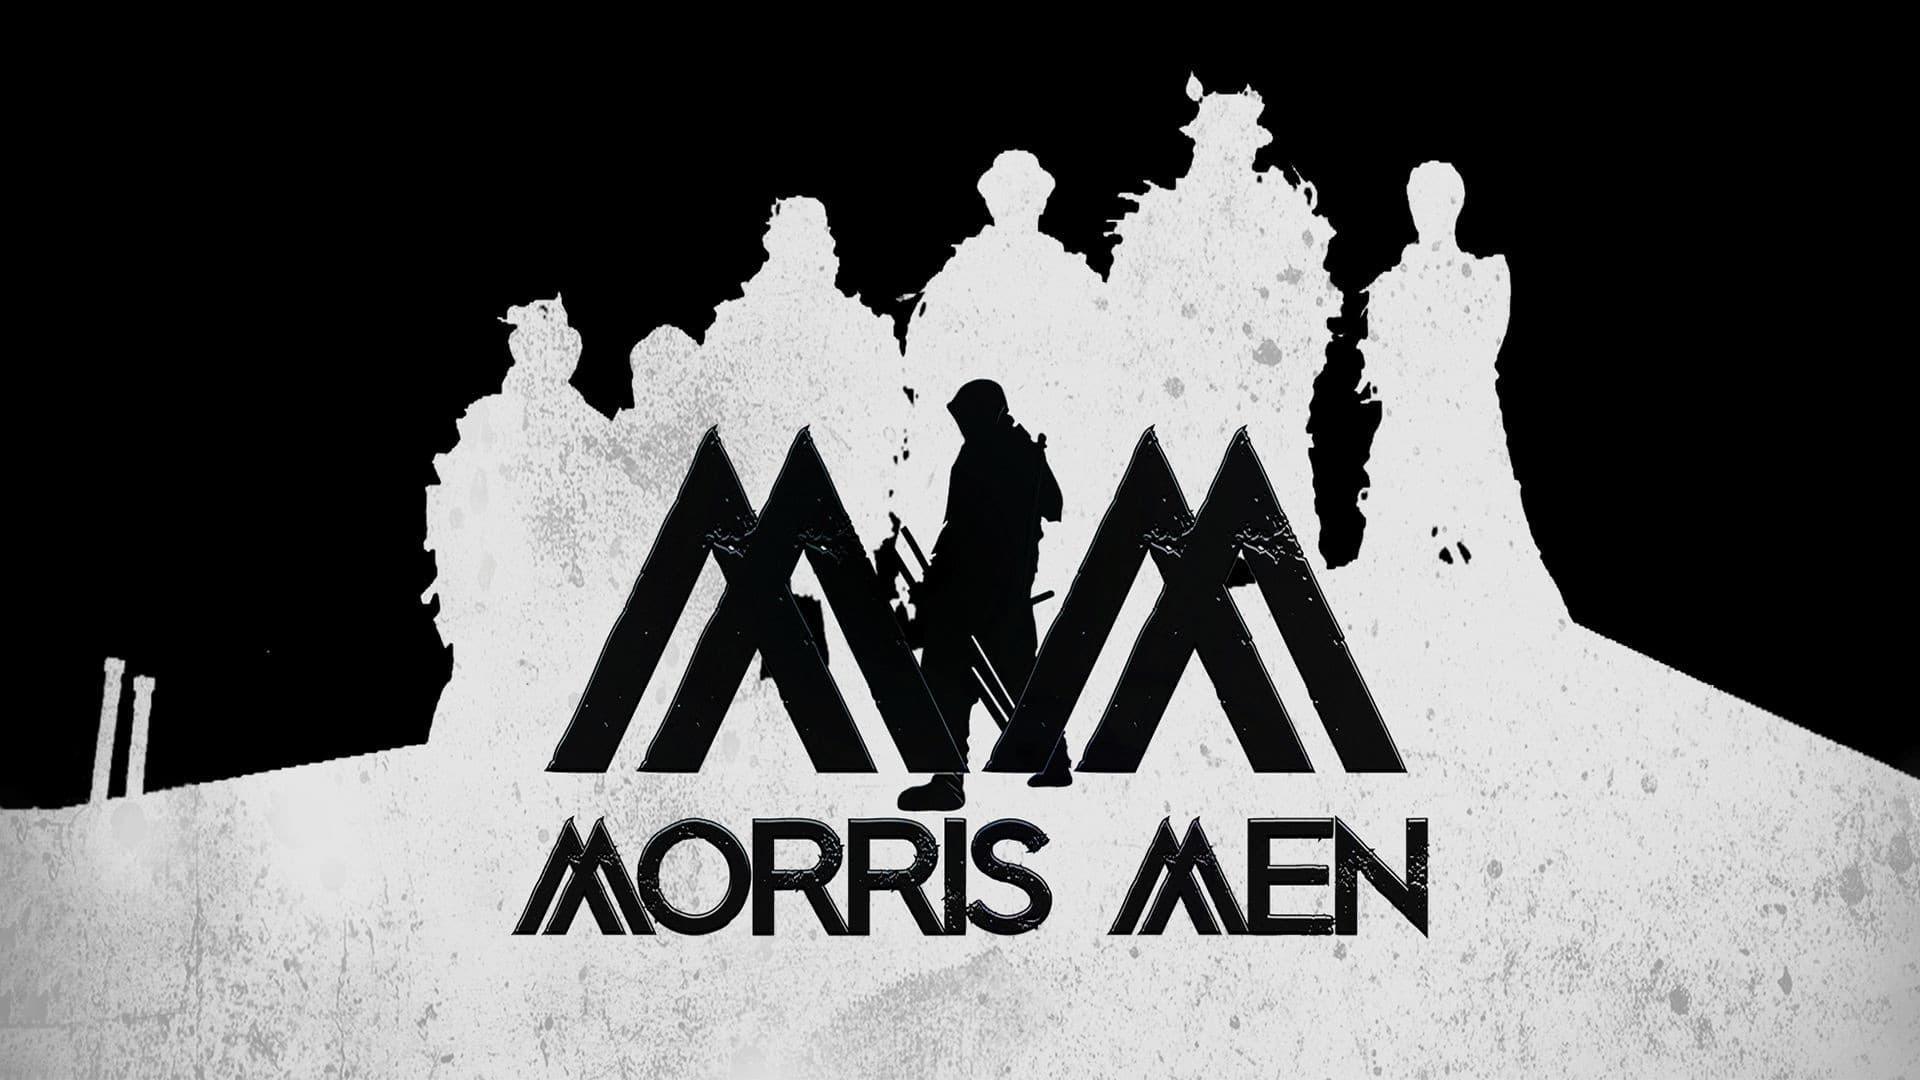 Morris Men backdrop